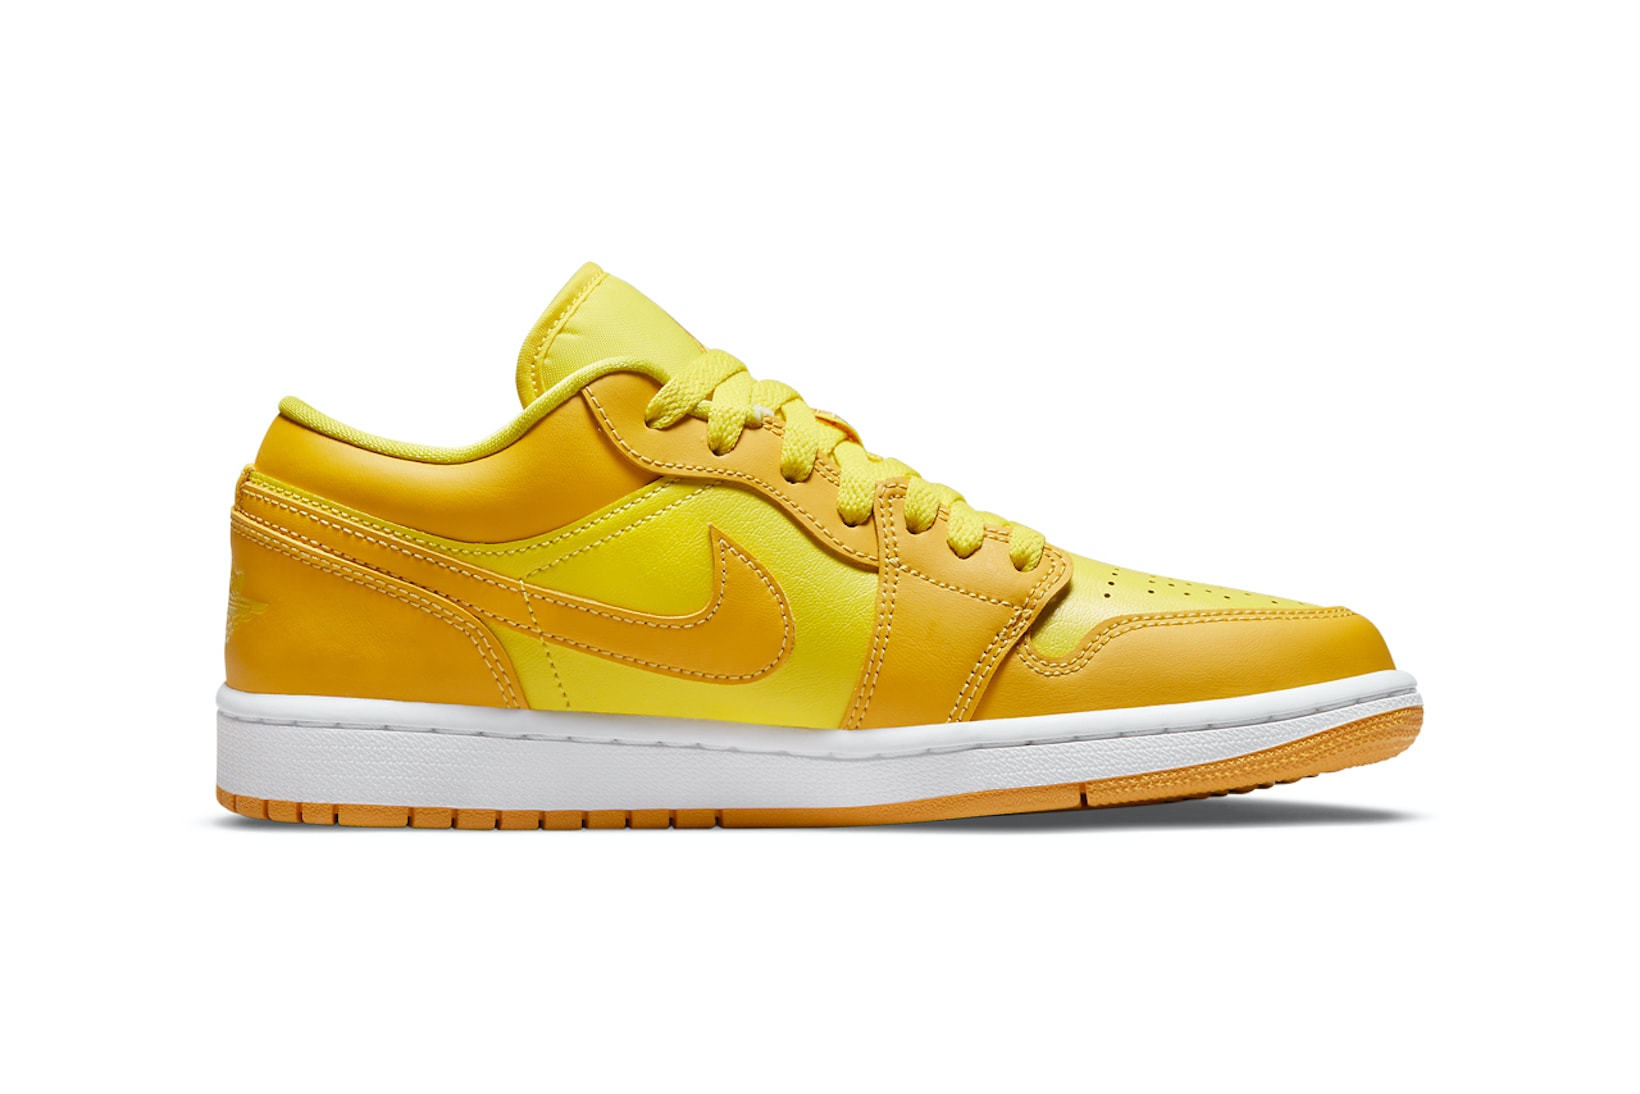 Nike Air Jordan 1 Low AJ1 Yellow Strike Colorway Sneakers Shoes Footwear Kicks Sneakerhead Lateral